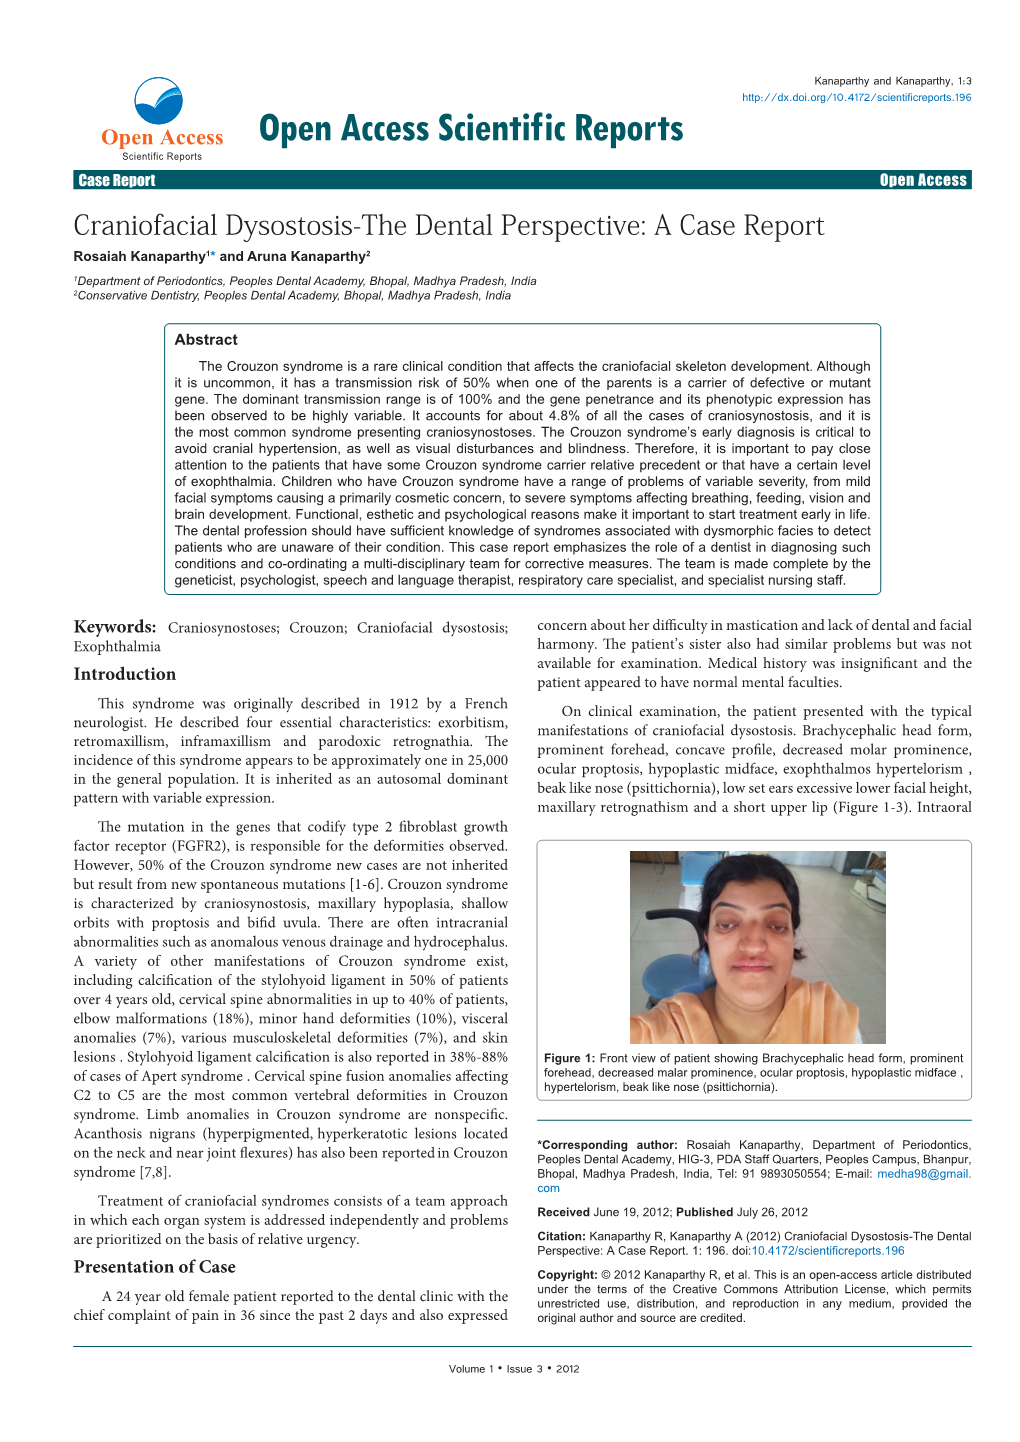 Craniofacial Dysostosis-The Dental Perspective